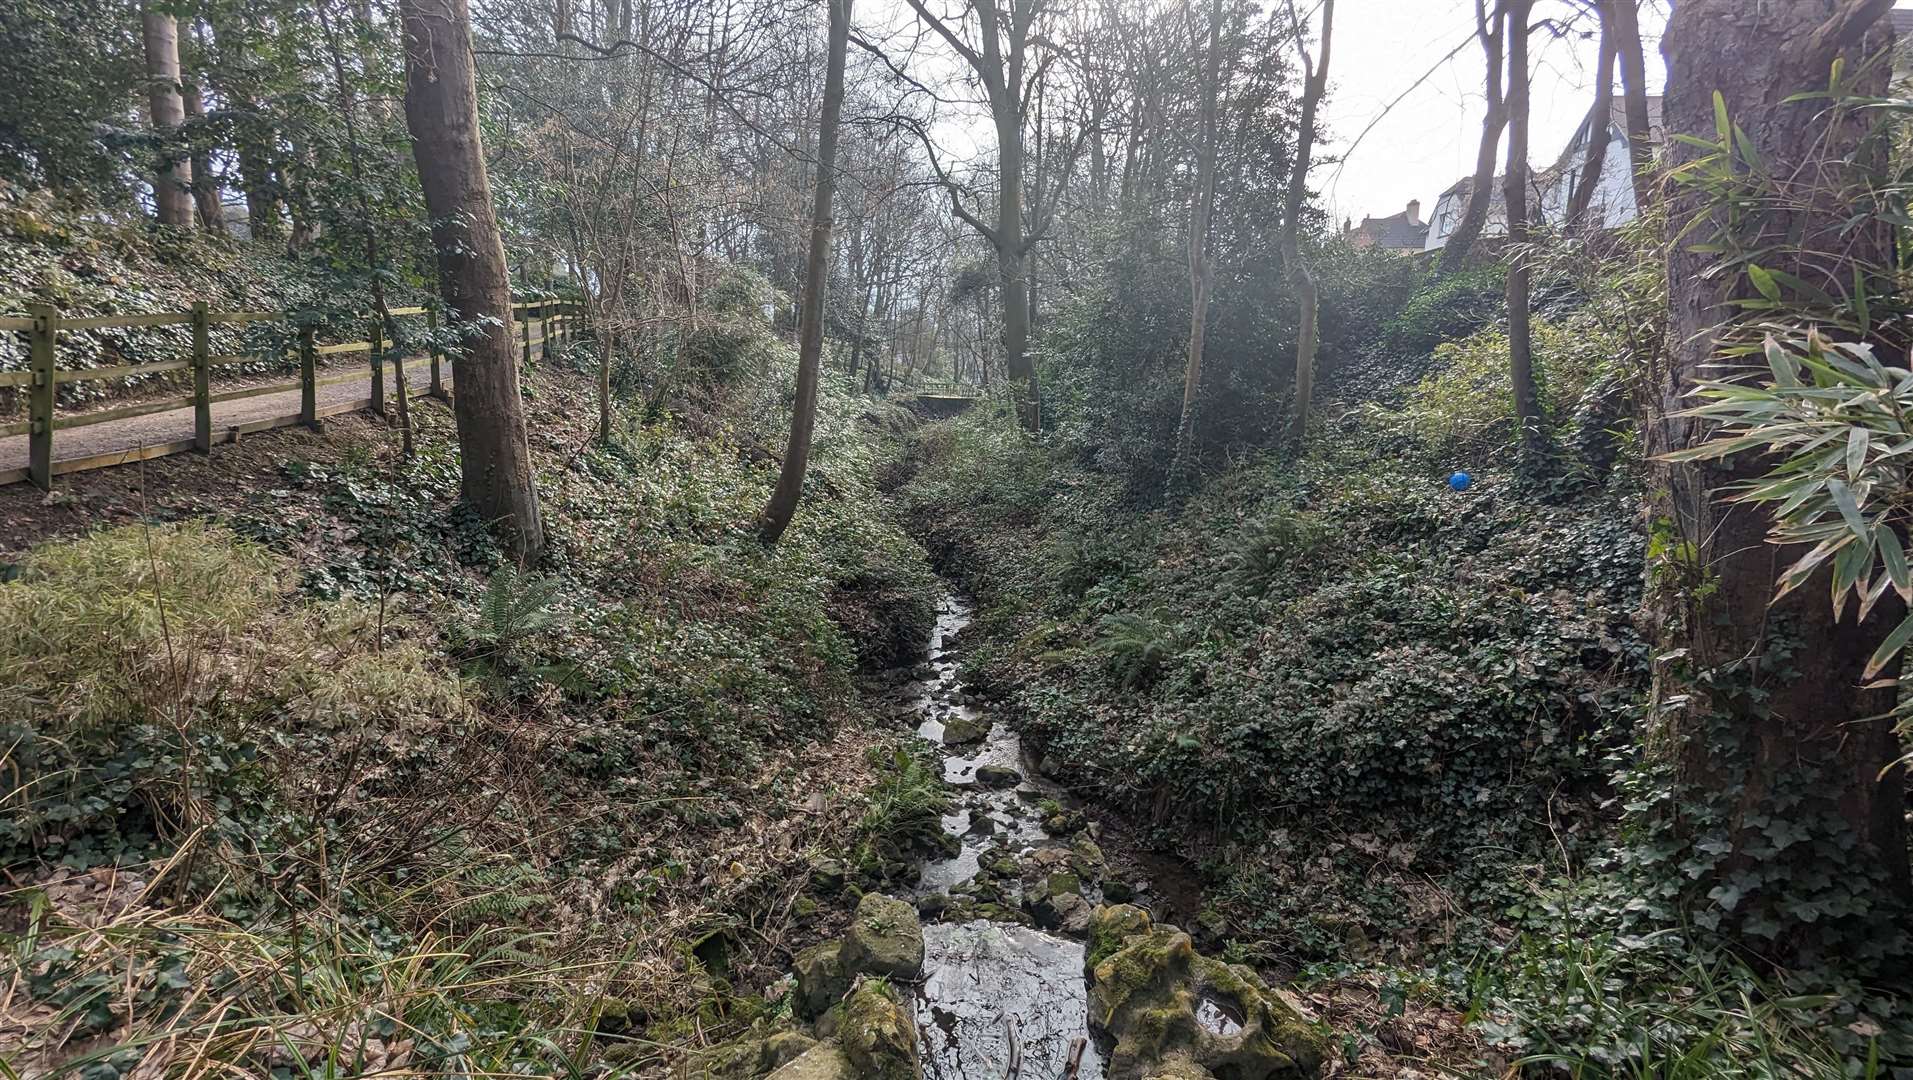 The stream runs down the valley towards the sea